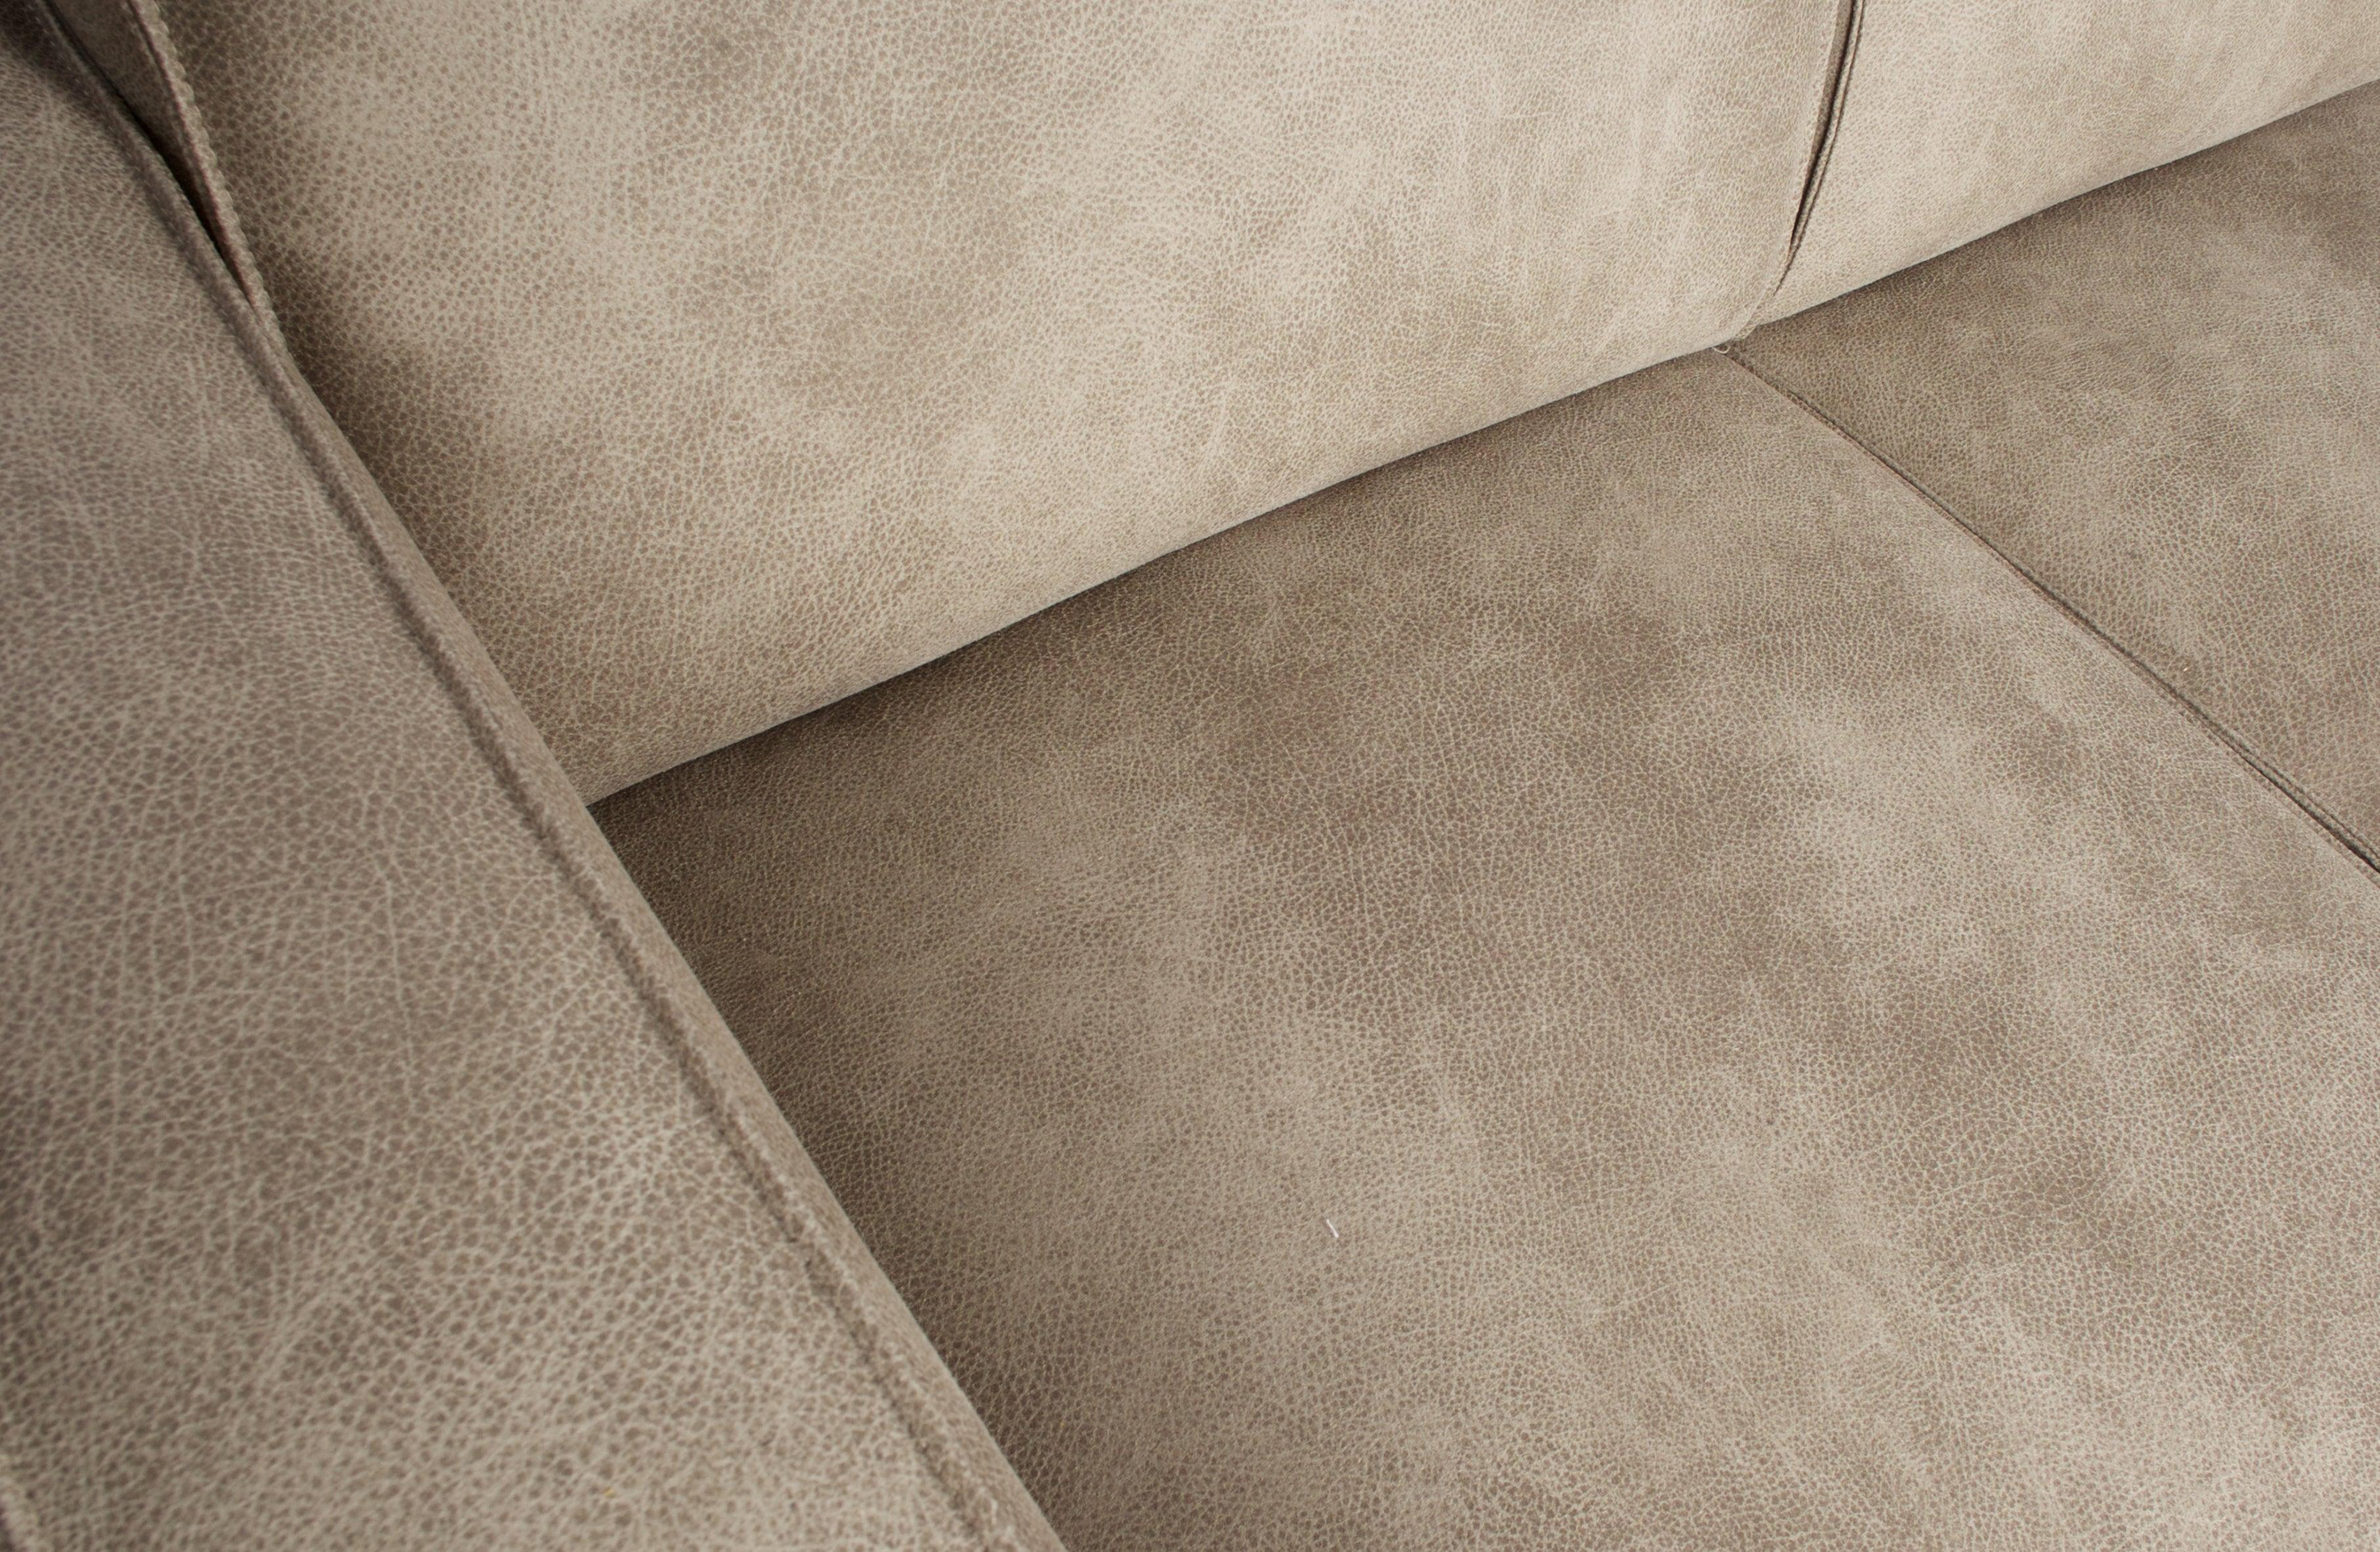 Sofa ekoskóra 4-osobowa STATEMENT taupe Be Pure    Eye on Design